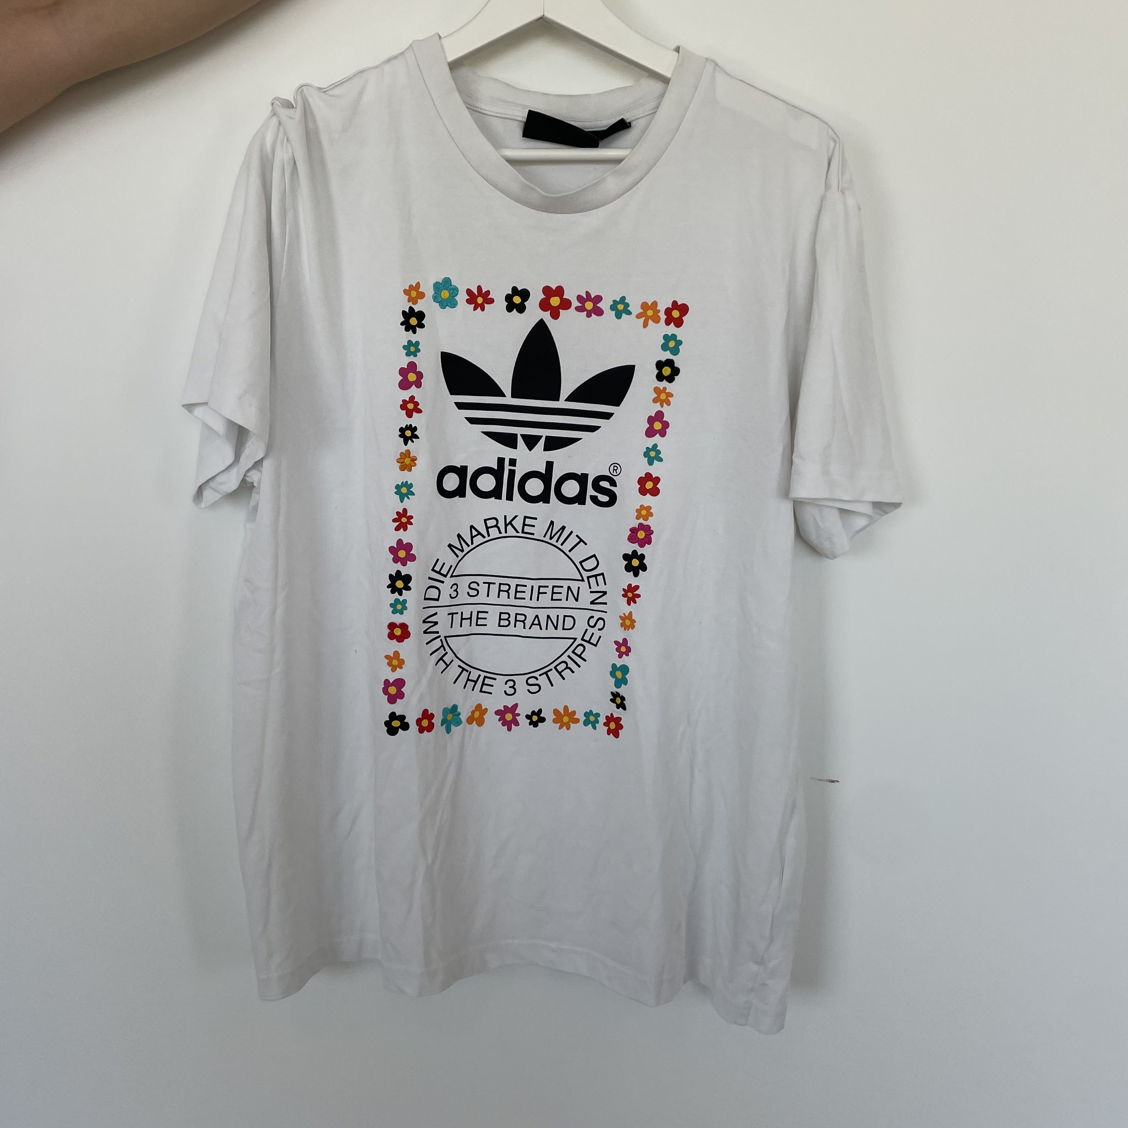 Adidas X Pharrell Williams T-Shirt